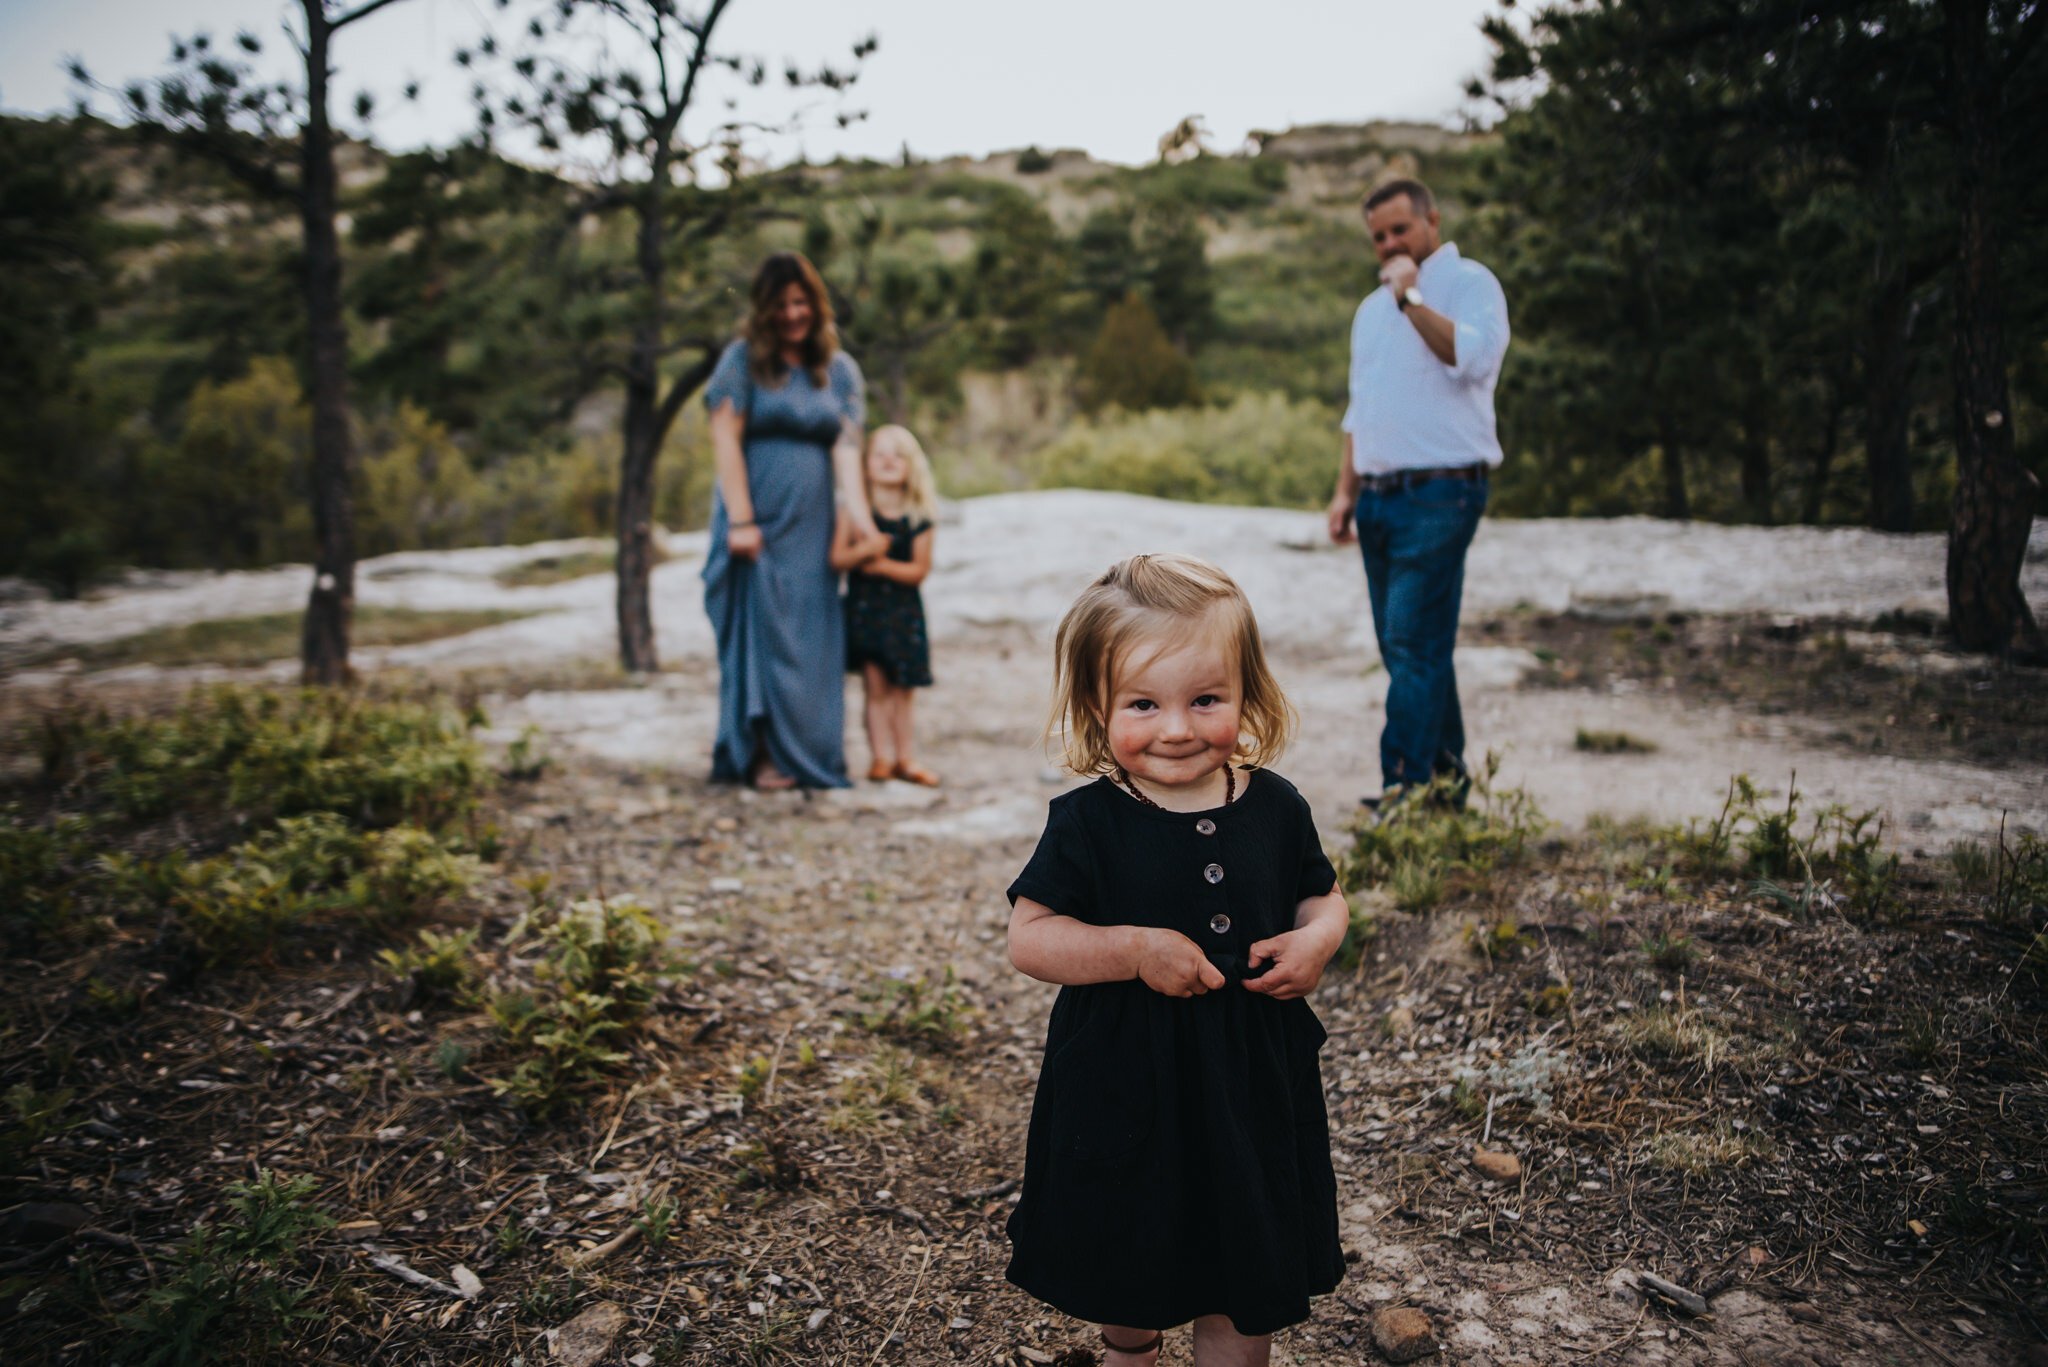 Mary+Lousia+Wiencek+Family+Session+Colorado+Springs+Colorado+Sunset+Mom+Dad+Daughters+Ute+Valley+Park+Wild+Prairie+Photography-16-2020.jpeg